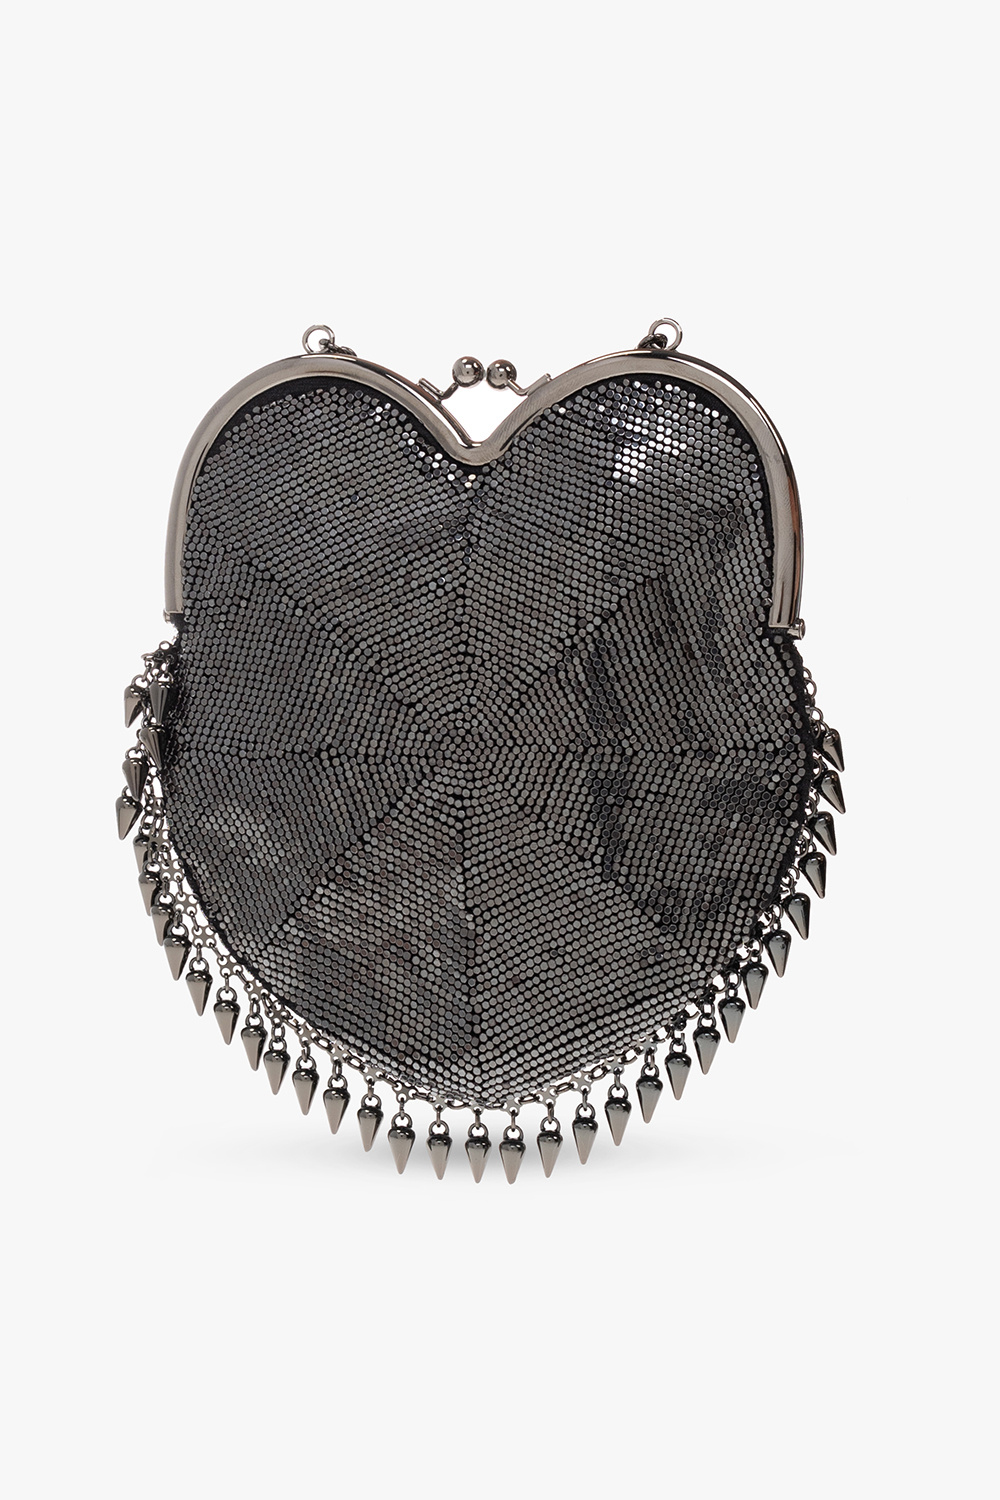 Saint Laurent ‘Heart Mini’ handbag